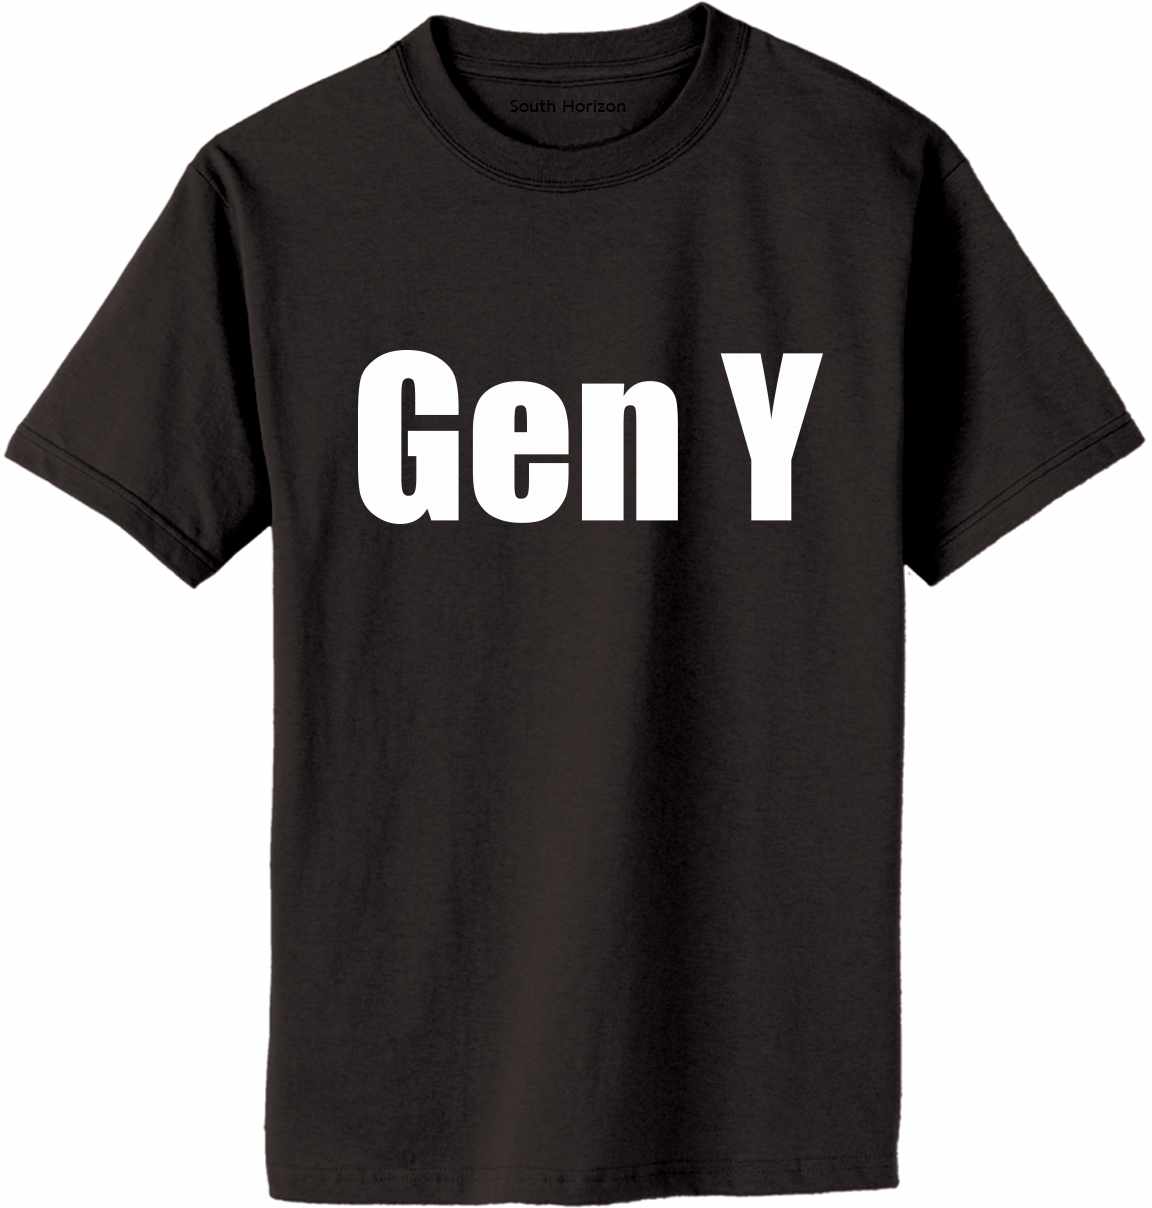 Gen Y on Adult T-Shirt